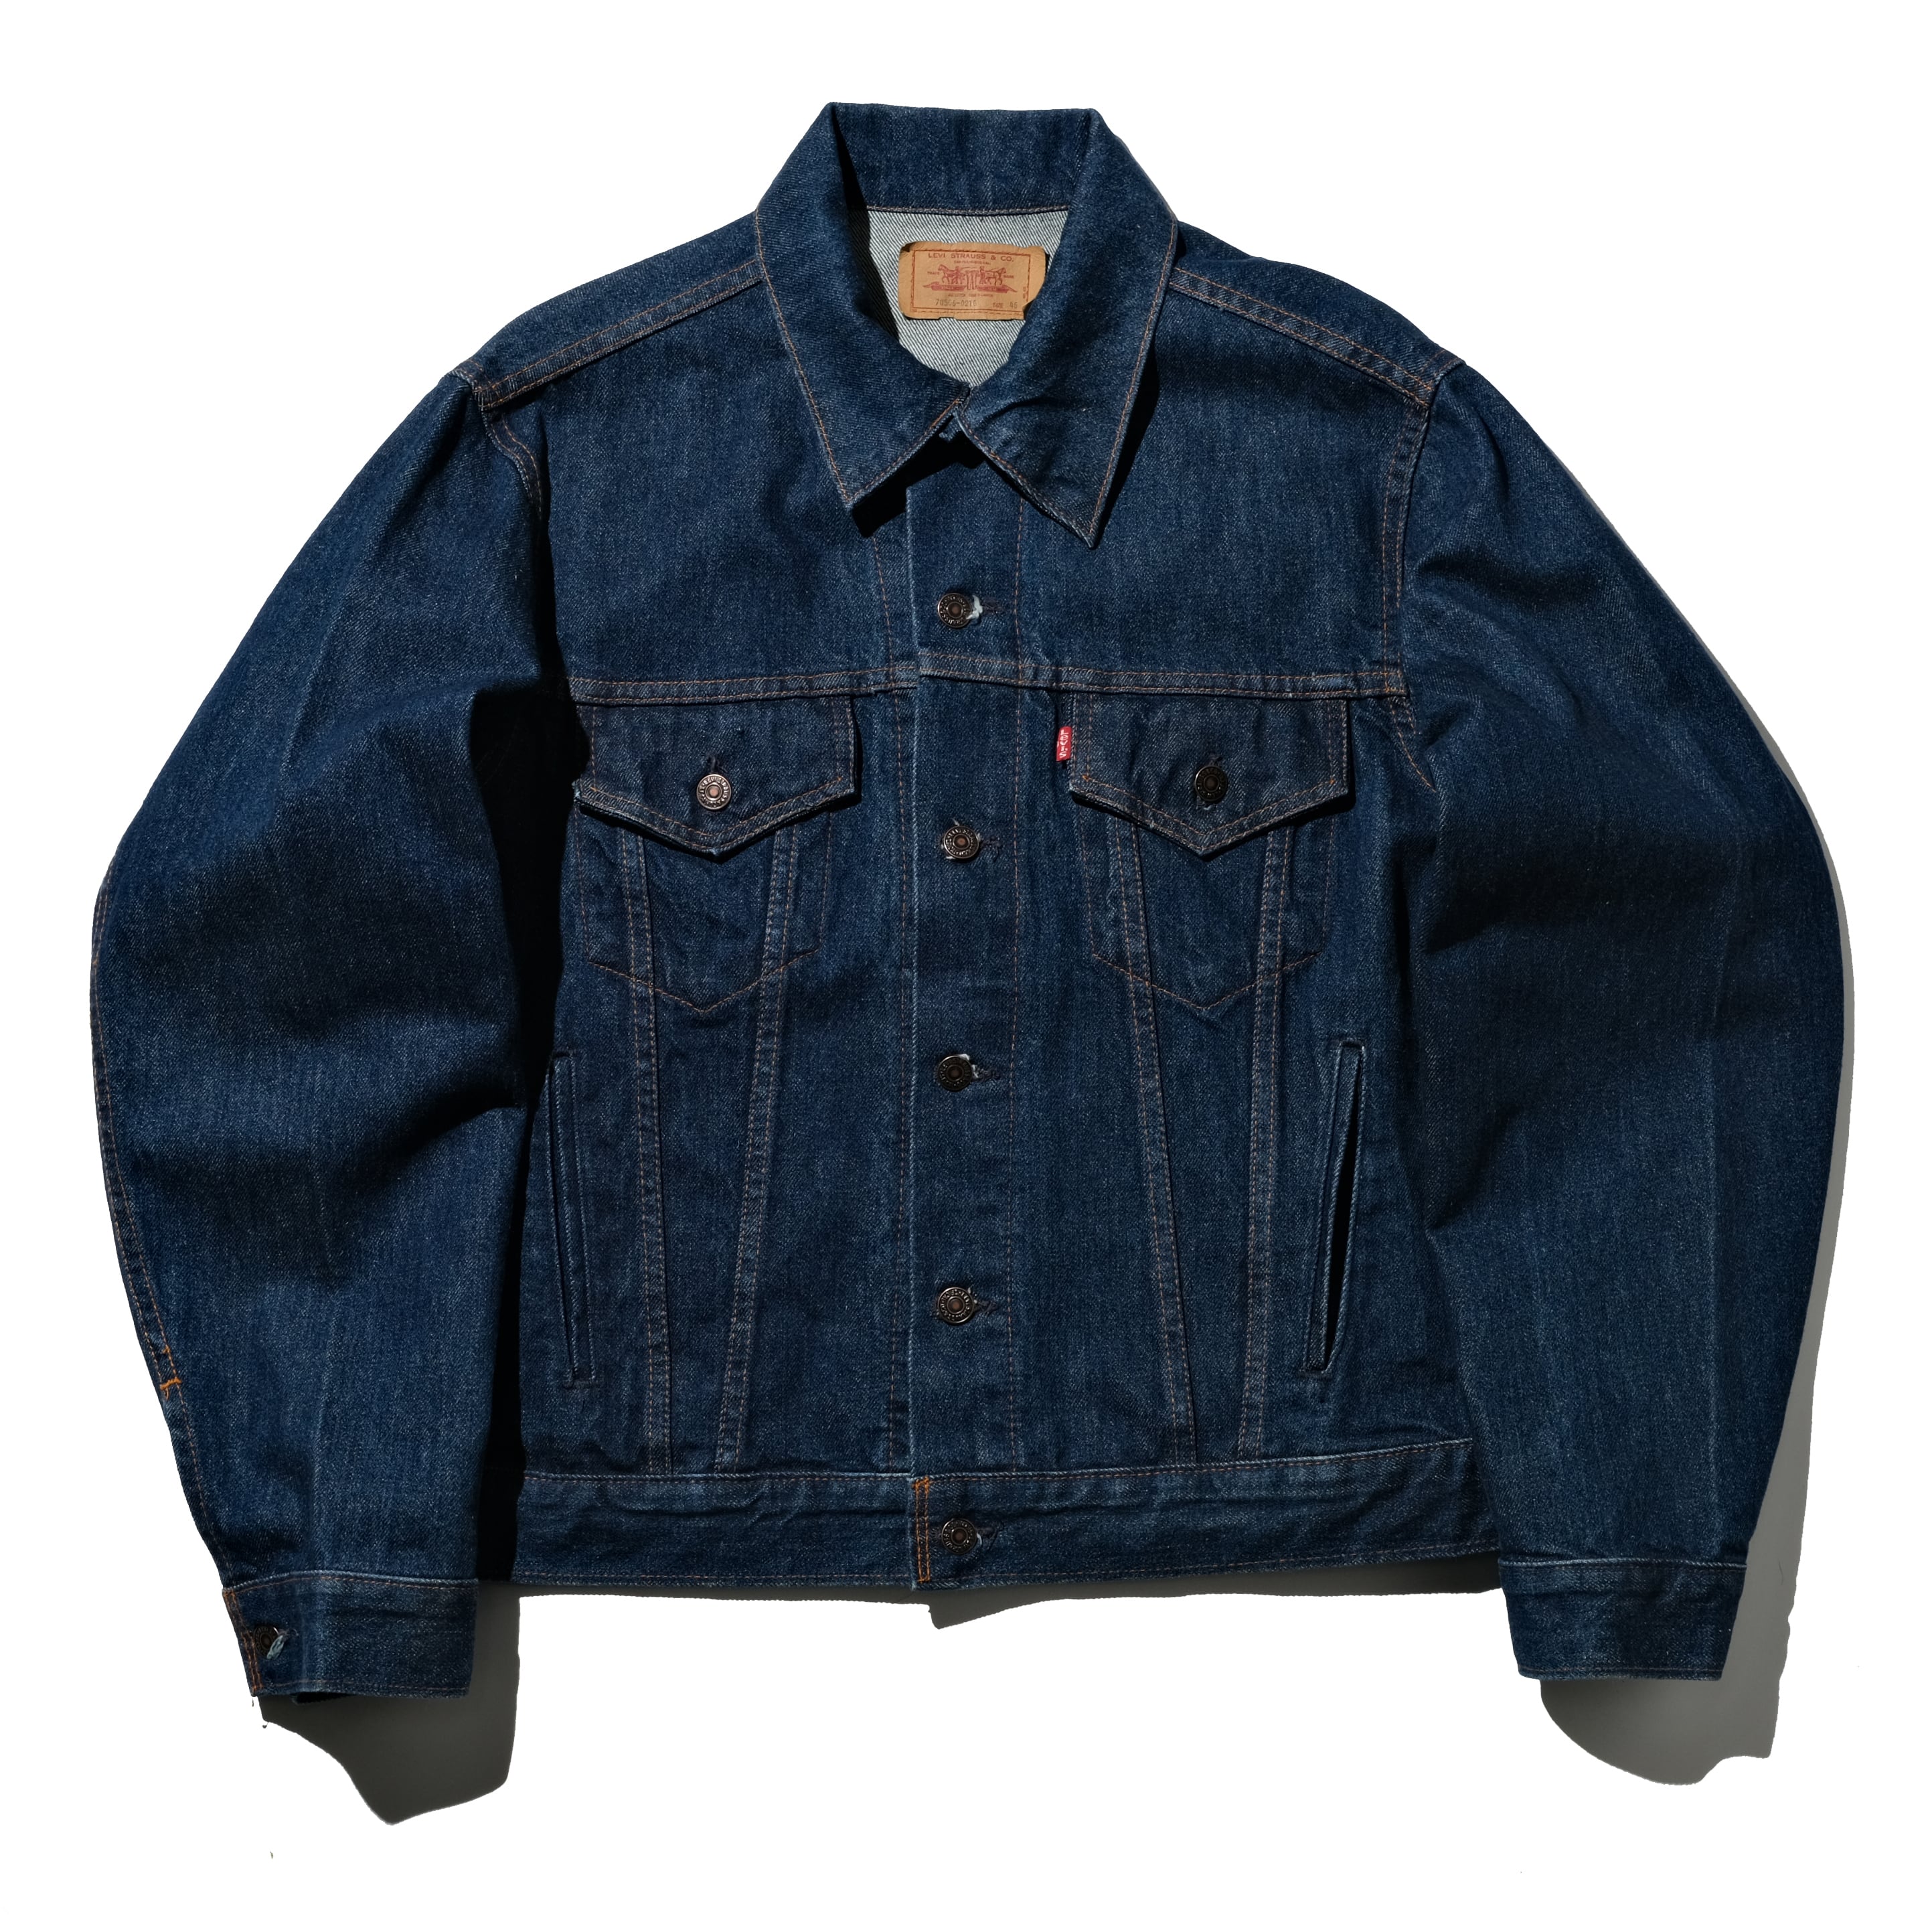 Levis/80s 70506 denim jacket made in USASeek商品一覧 - Gジャン